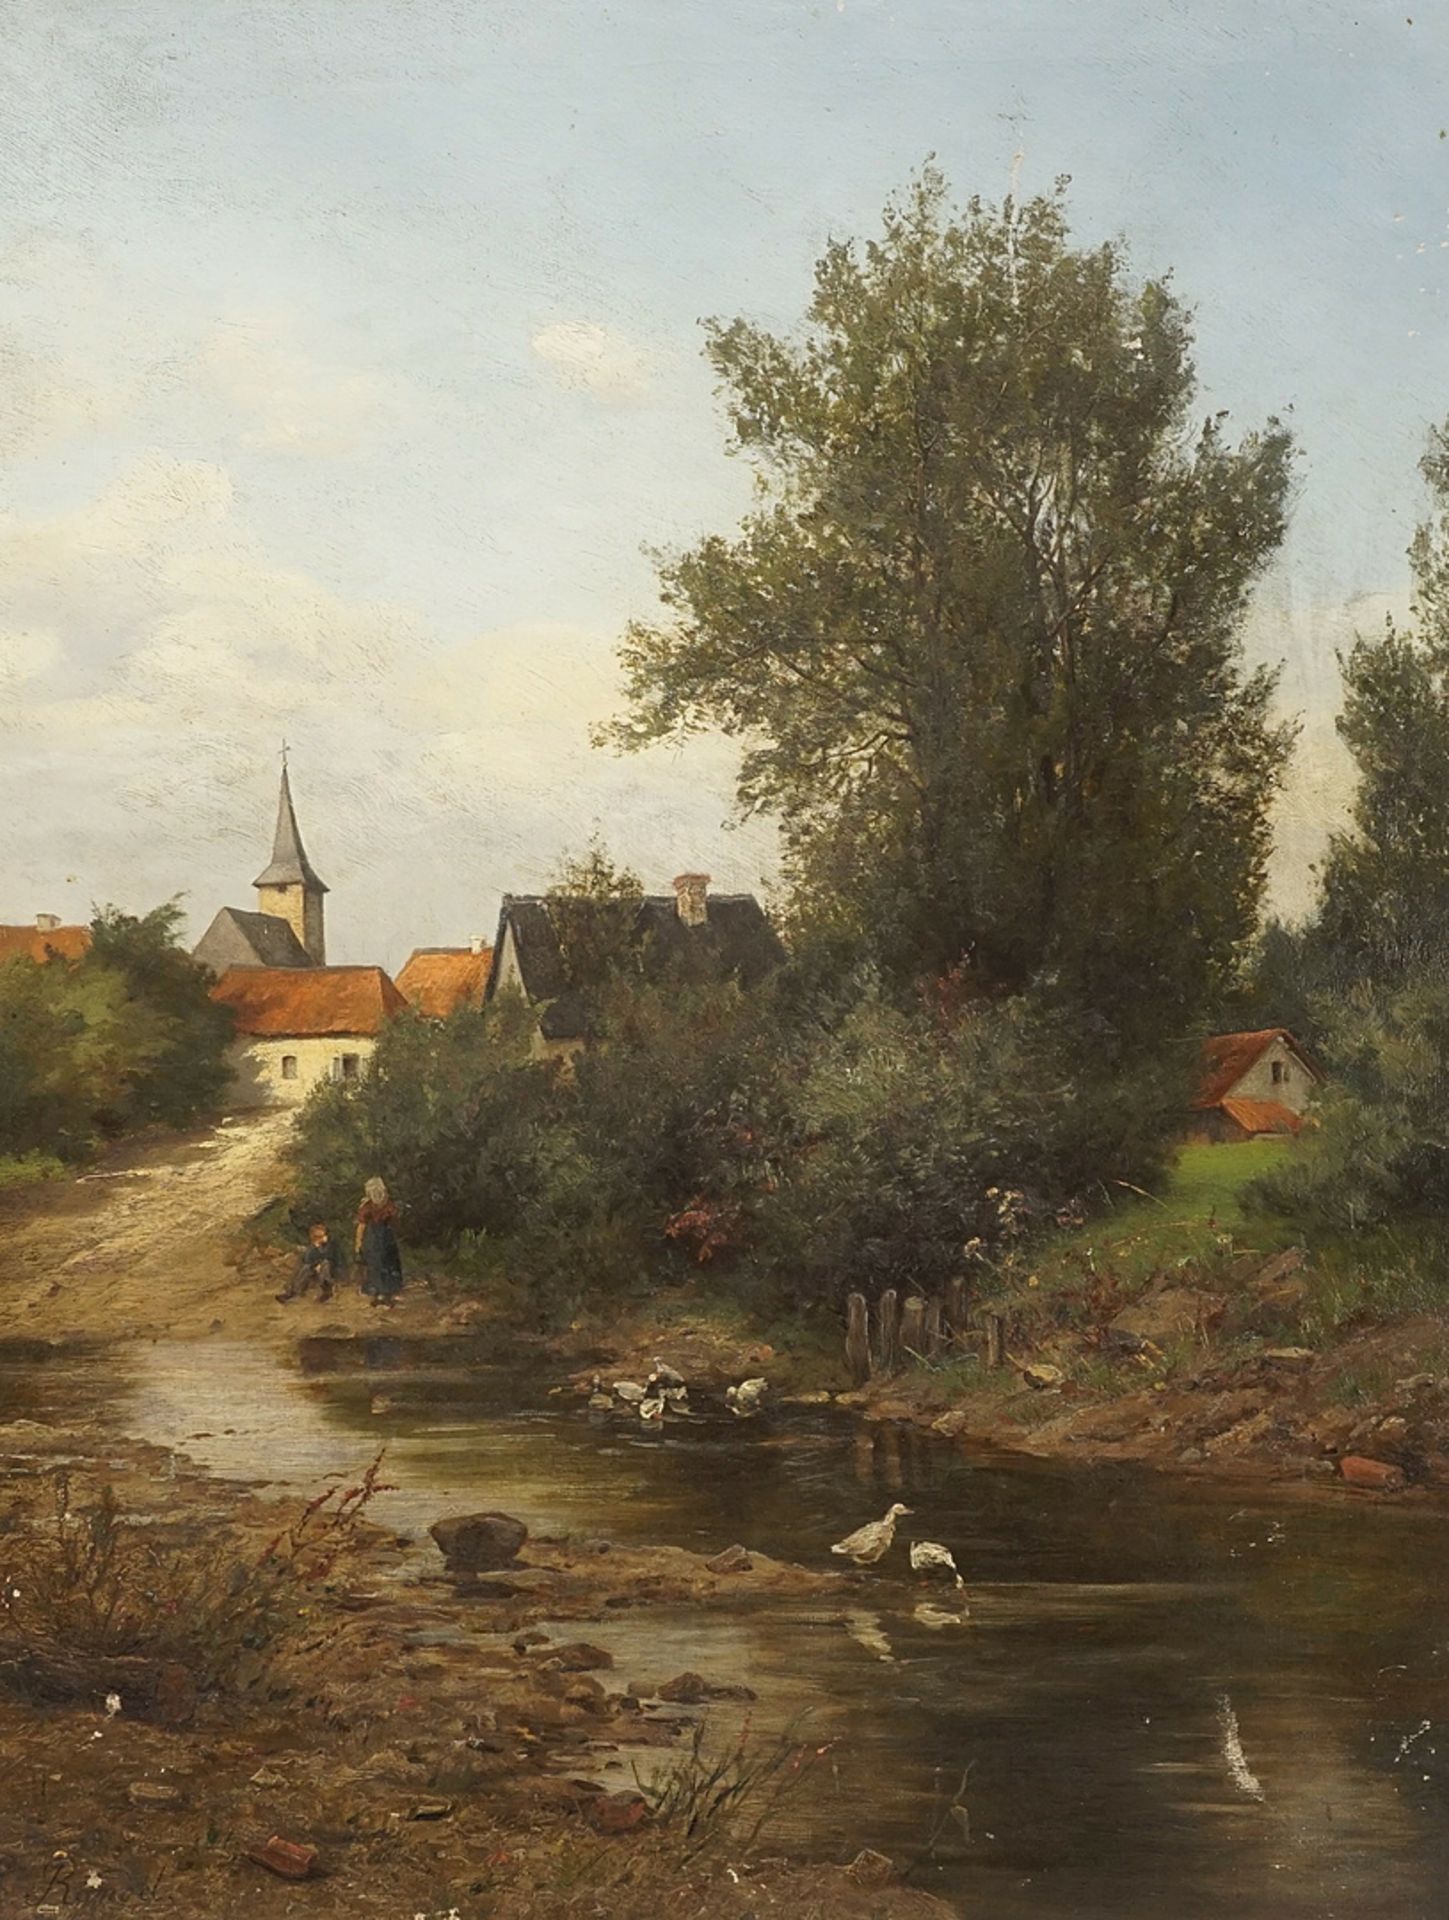 E. Randel, "Dorf am Teich"